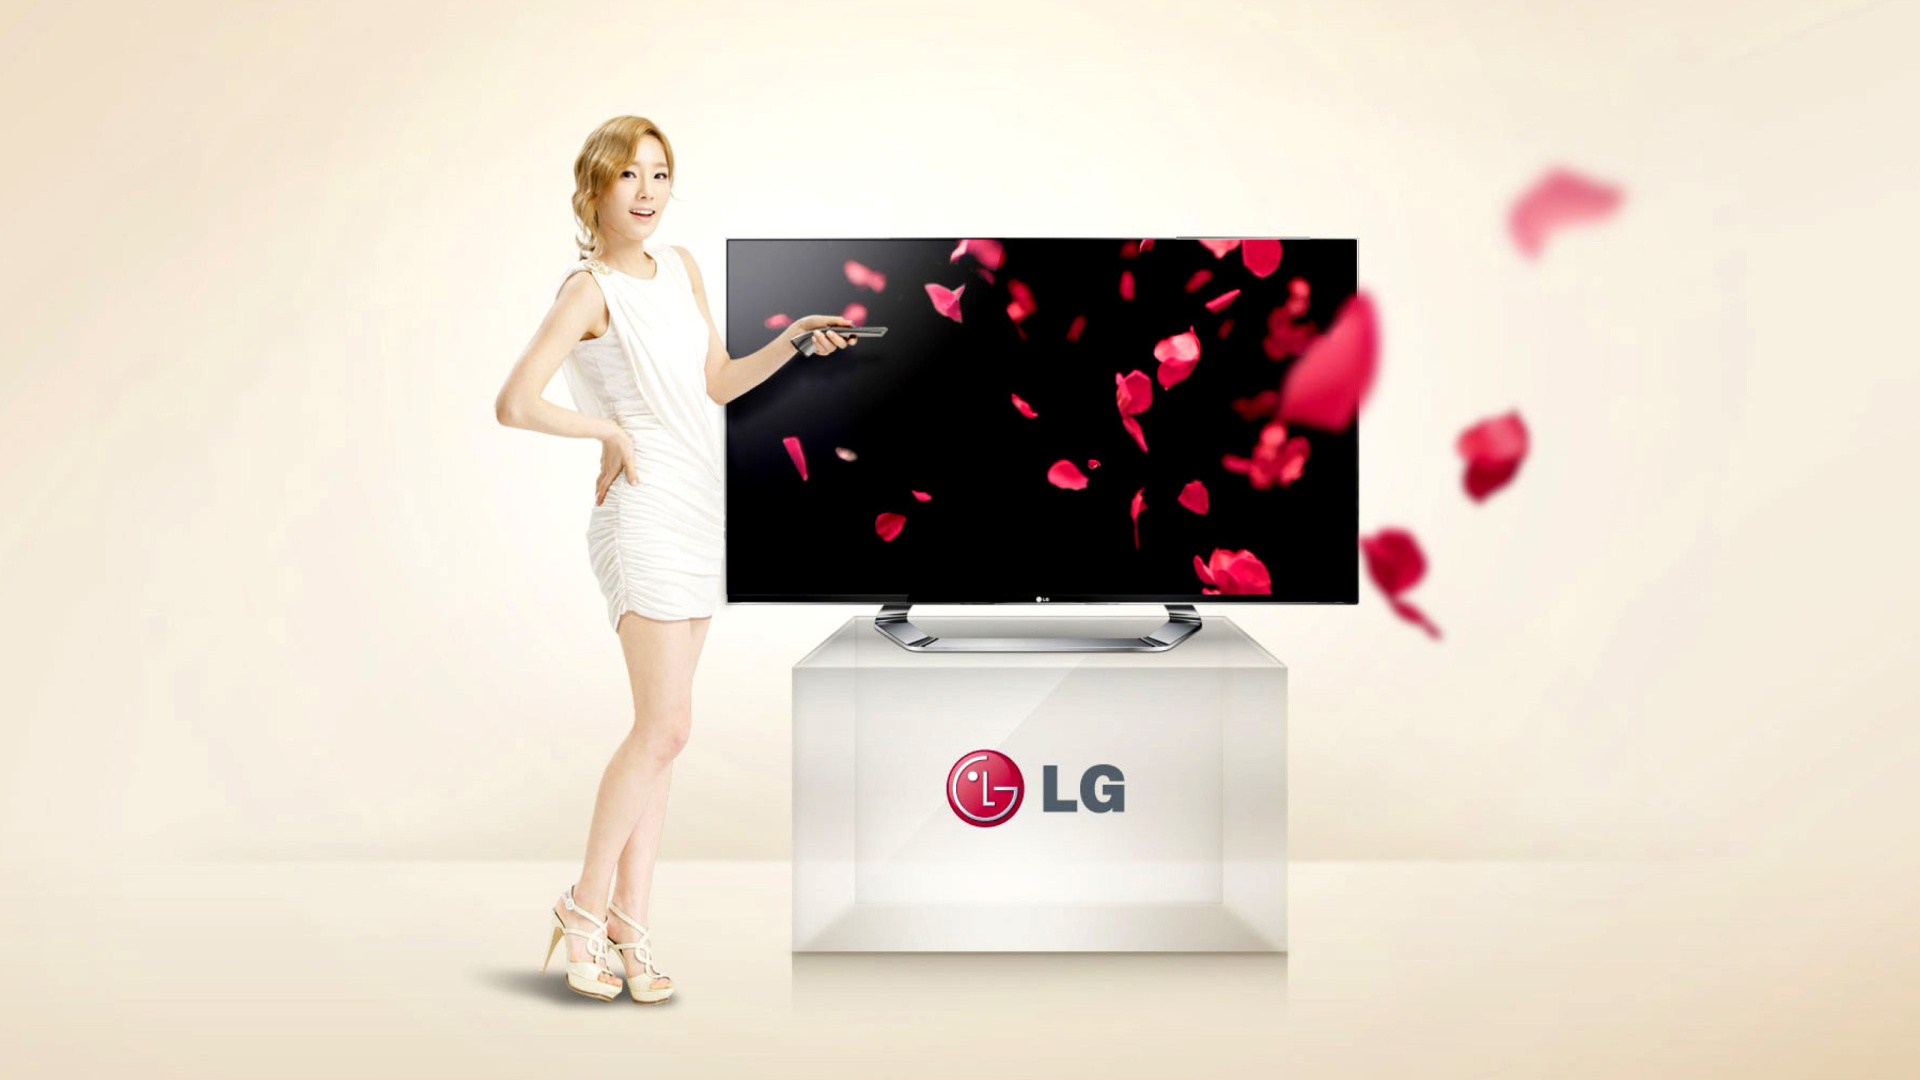 LG Smart TV wallpaper 1920x1080